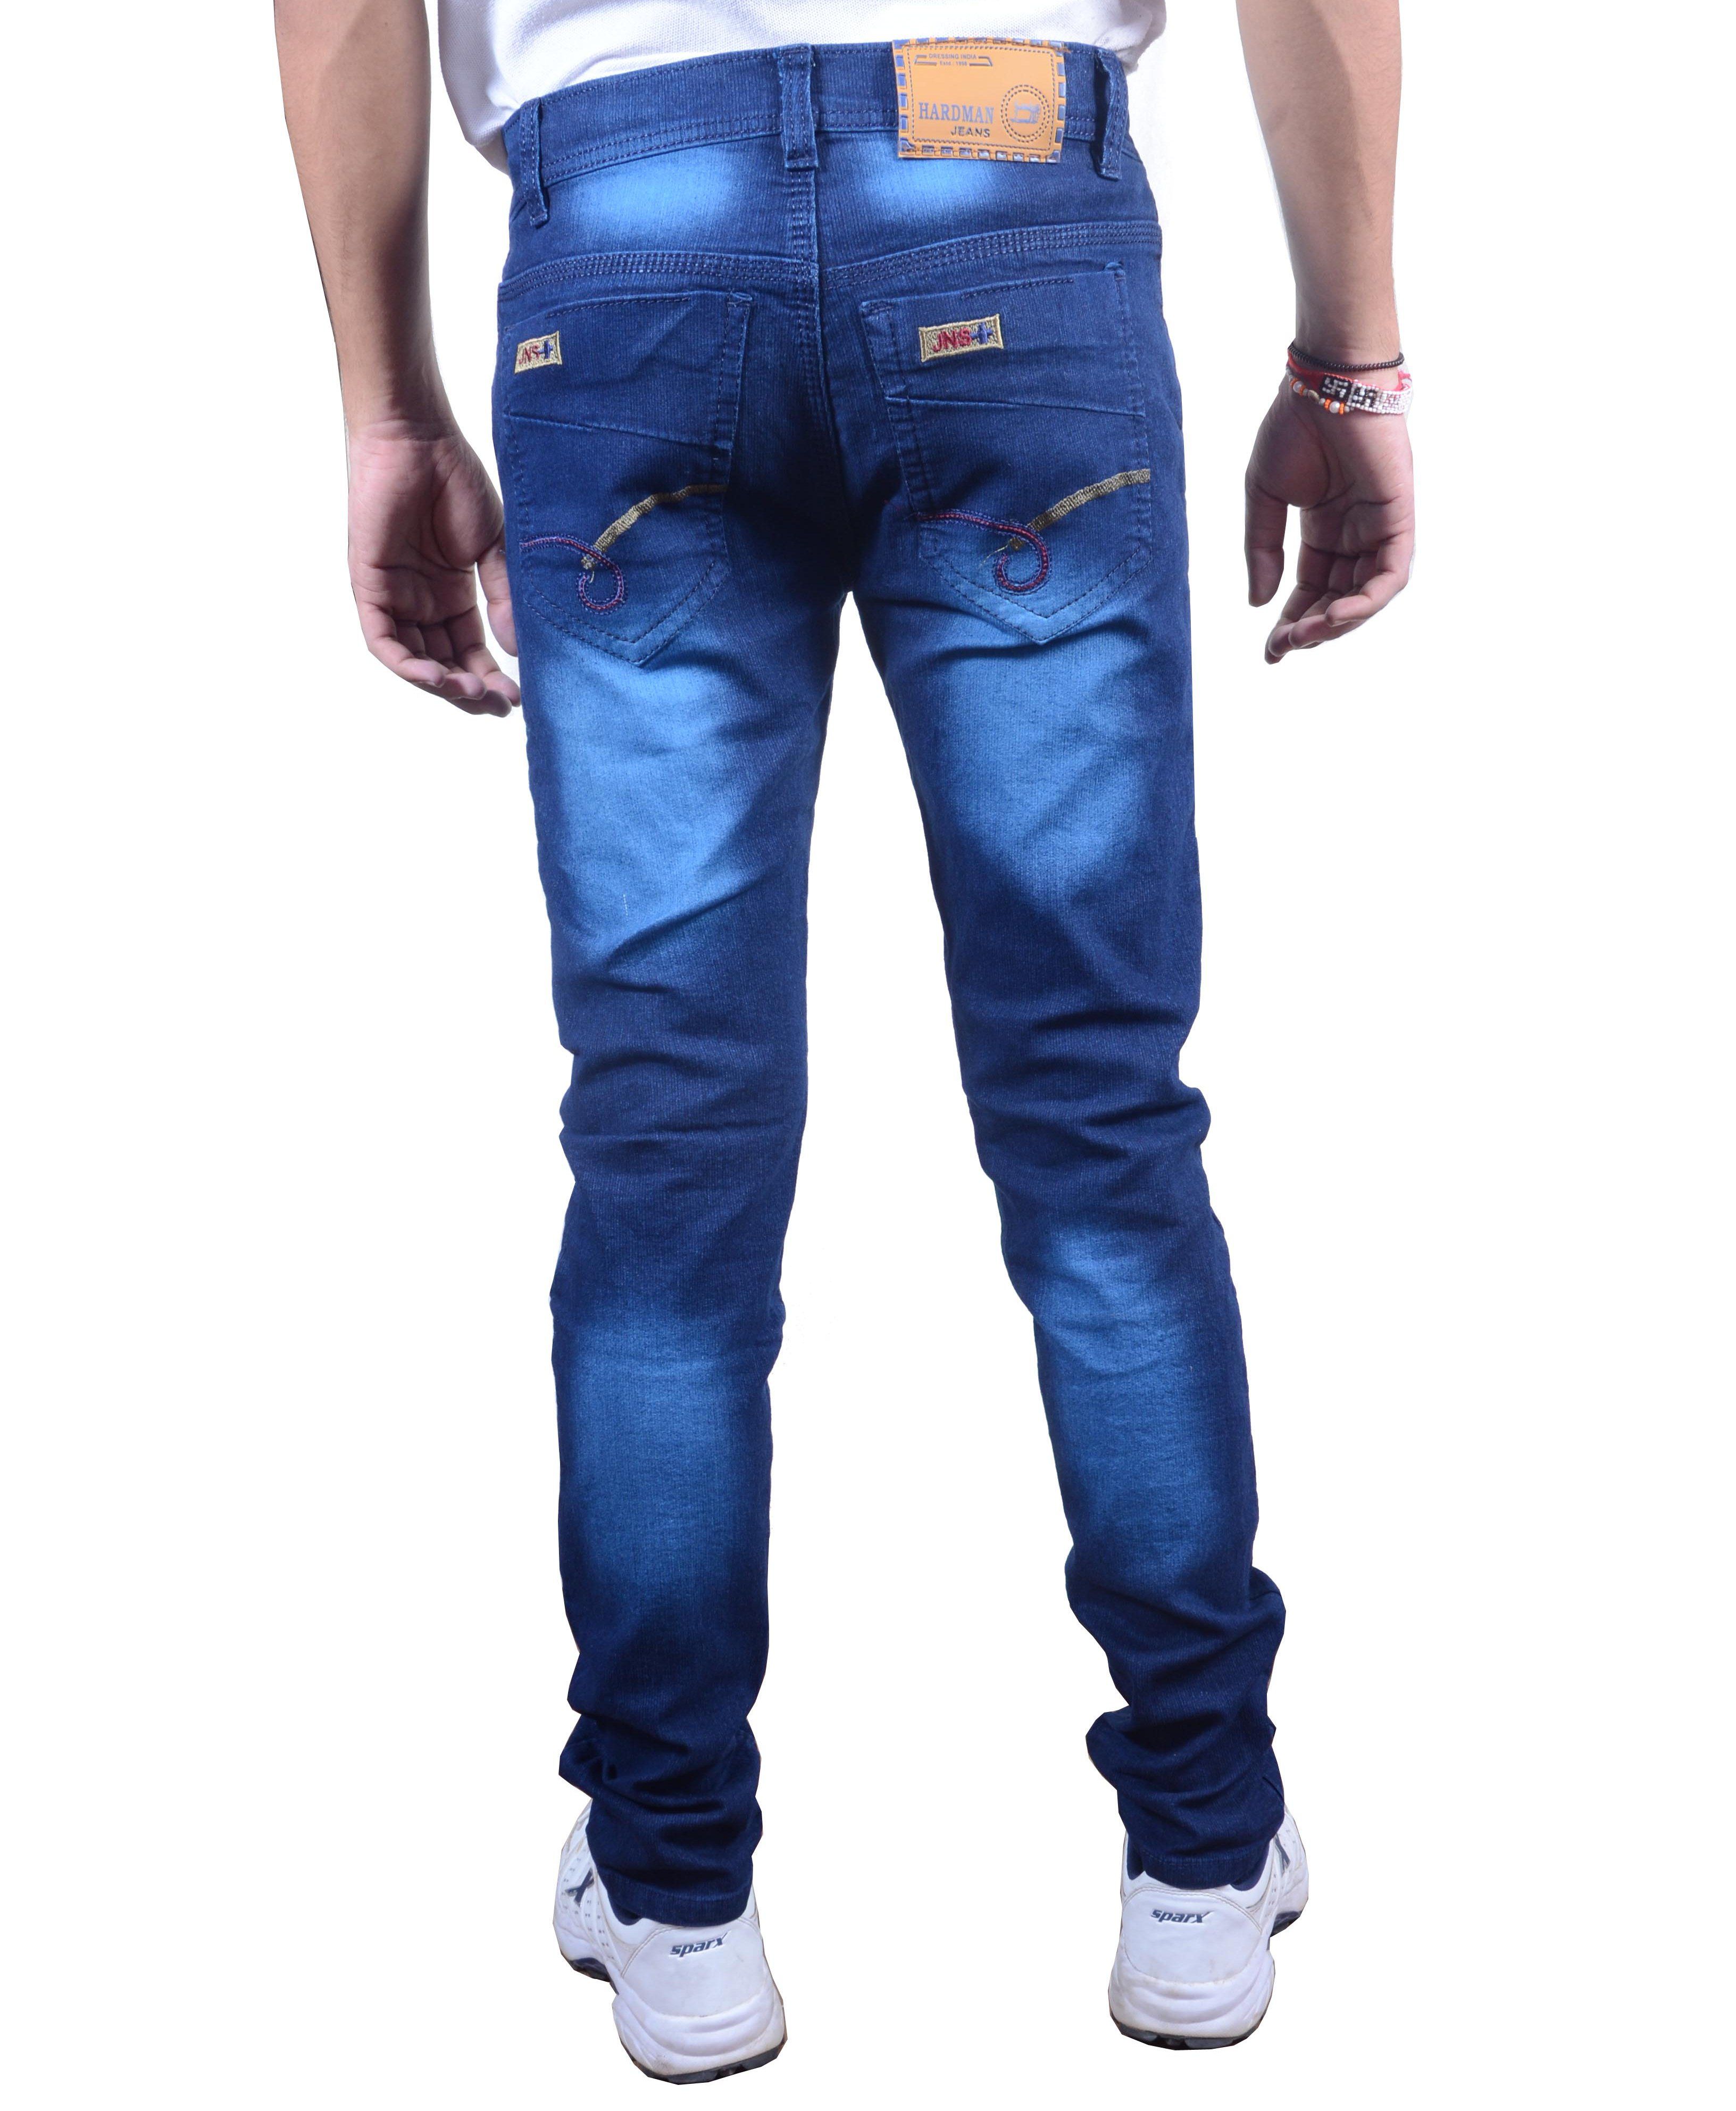 Zimboo Blue Regular Fit Jeans - Buy Zimboo Blue Regular Fit Jeans ...